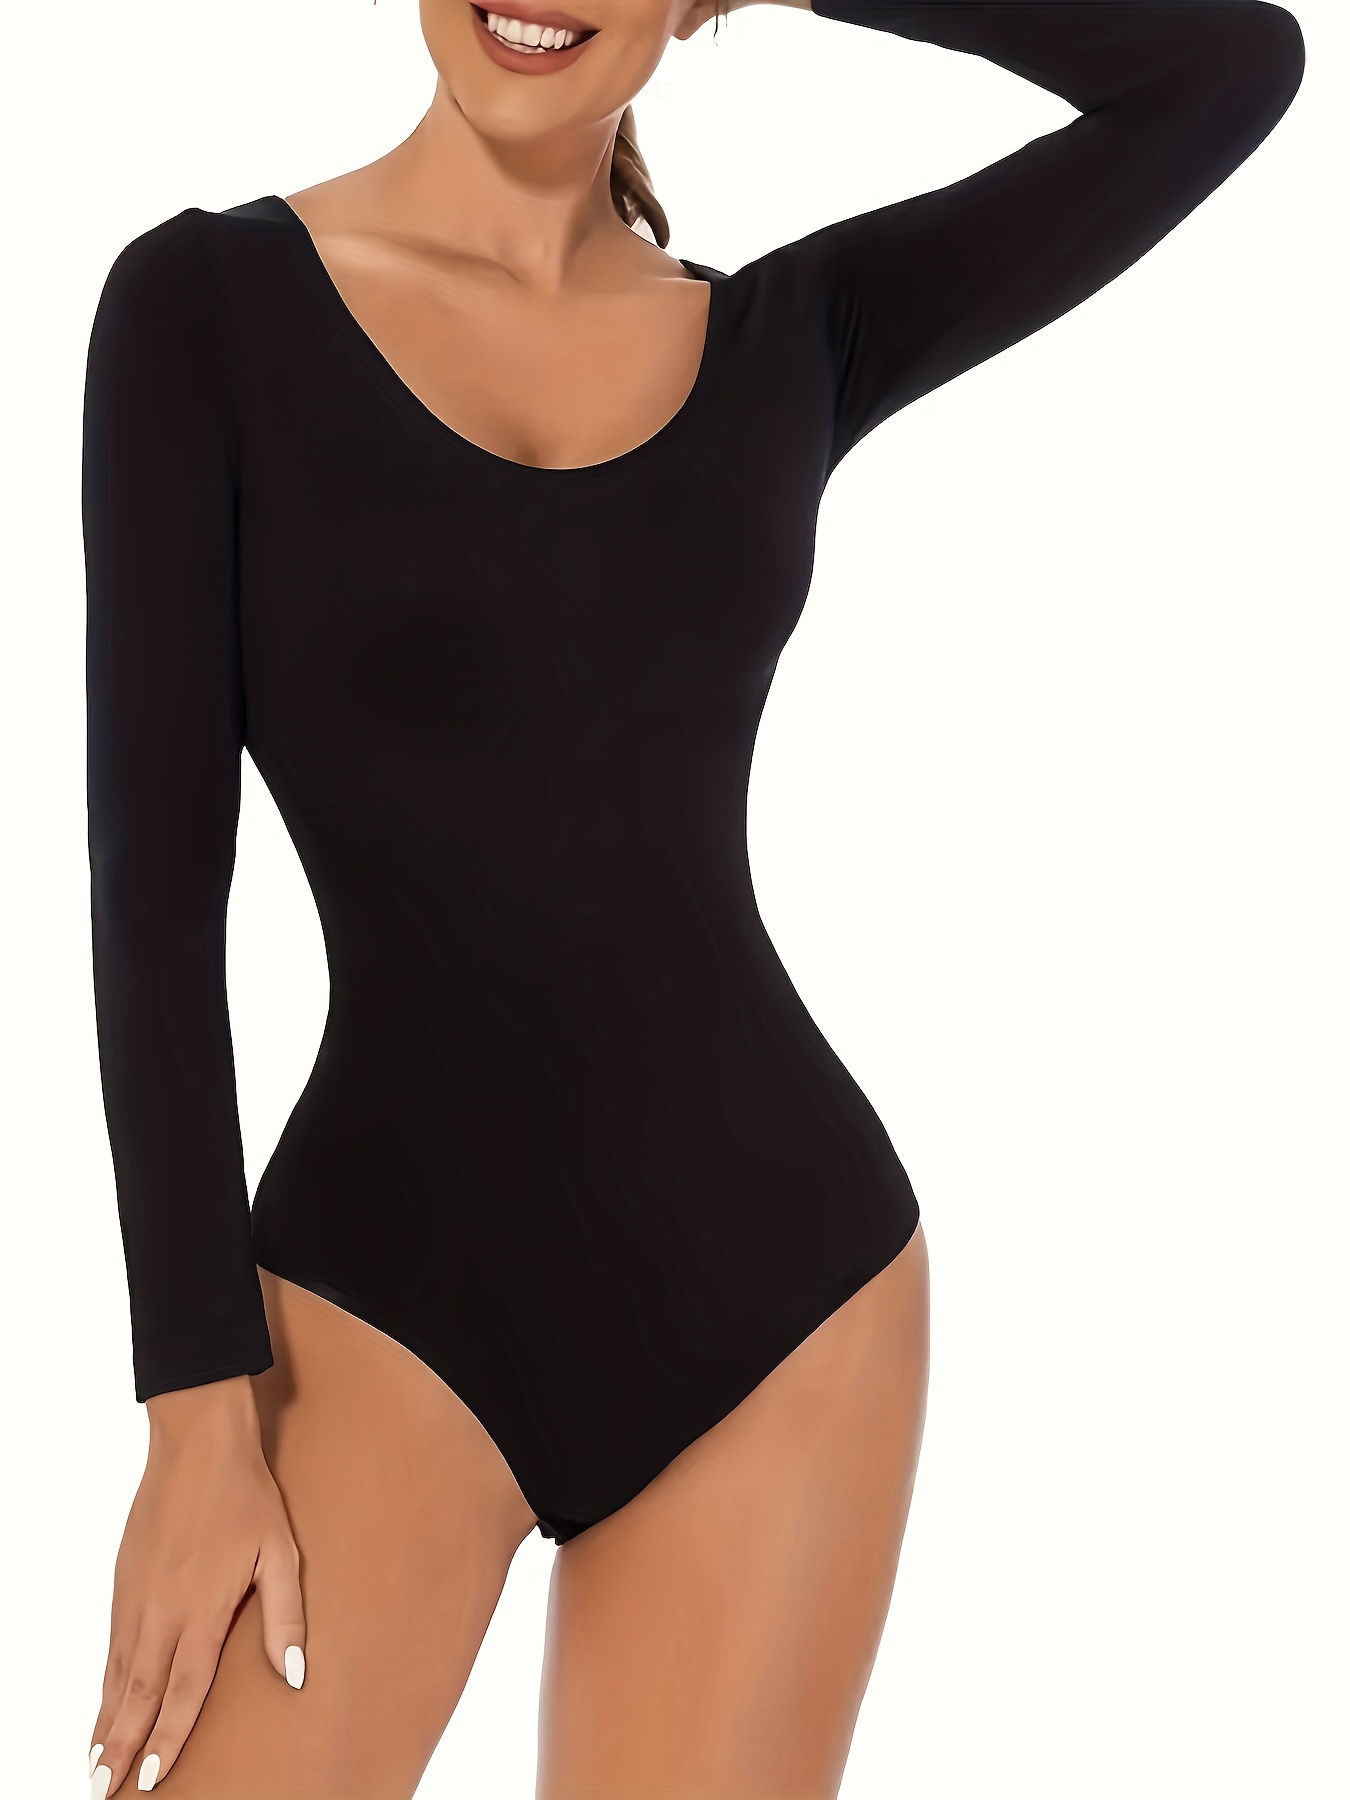 Slimming black long-sleeved women's body suit